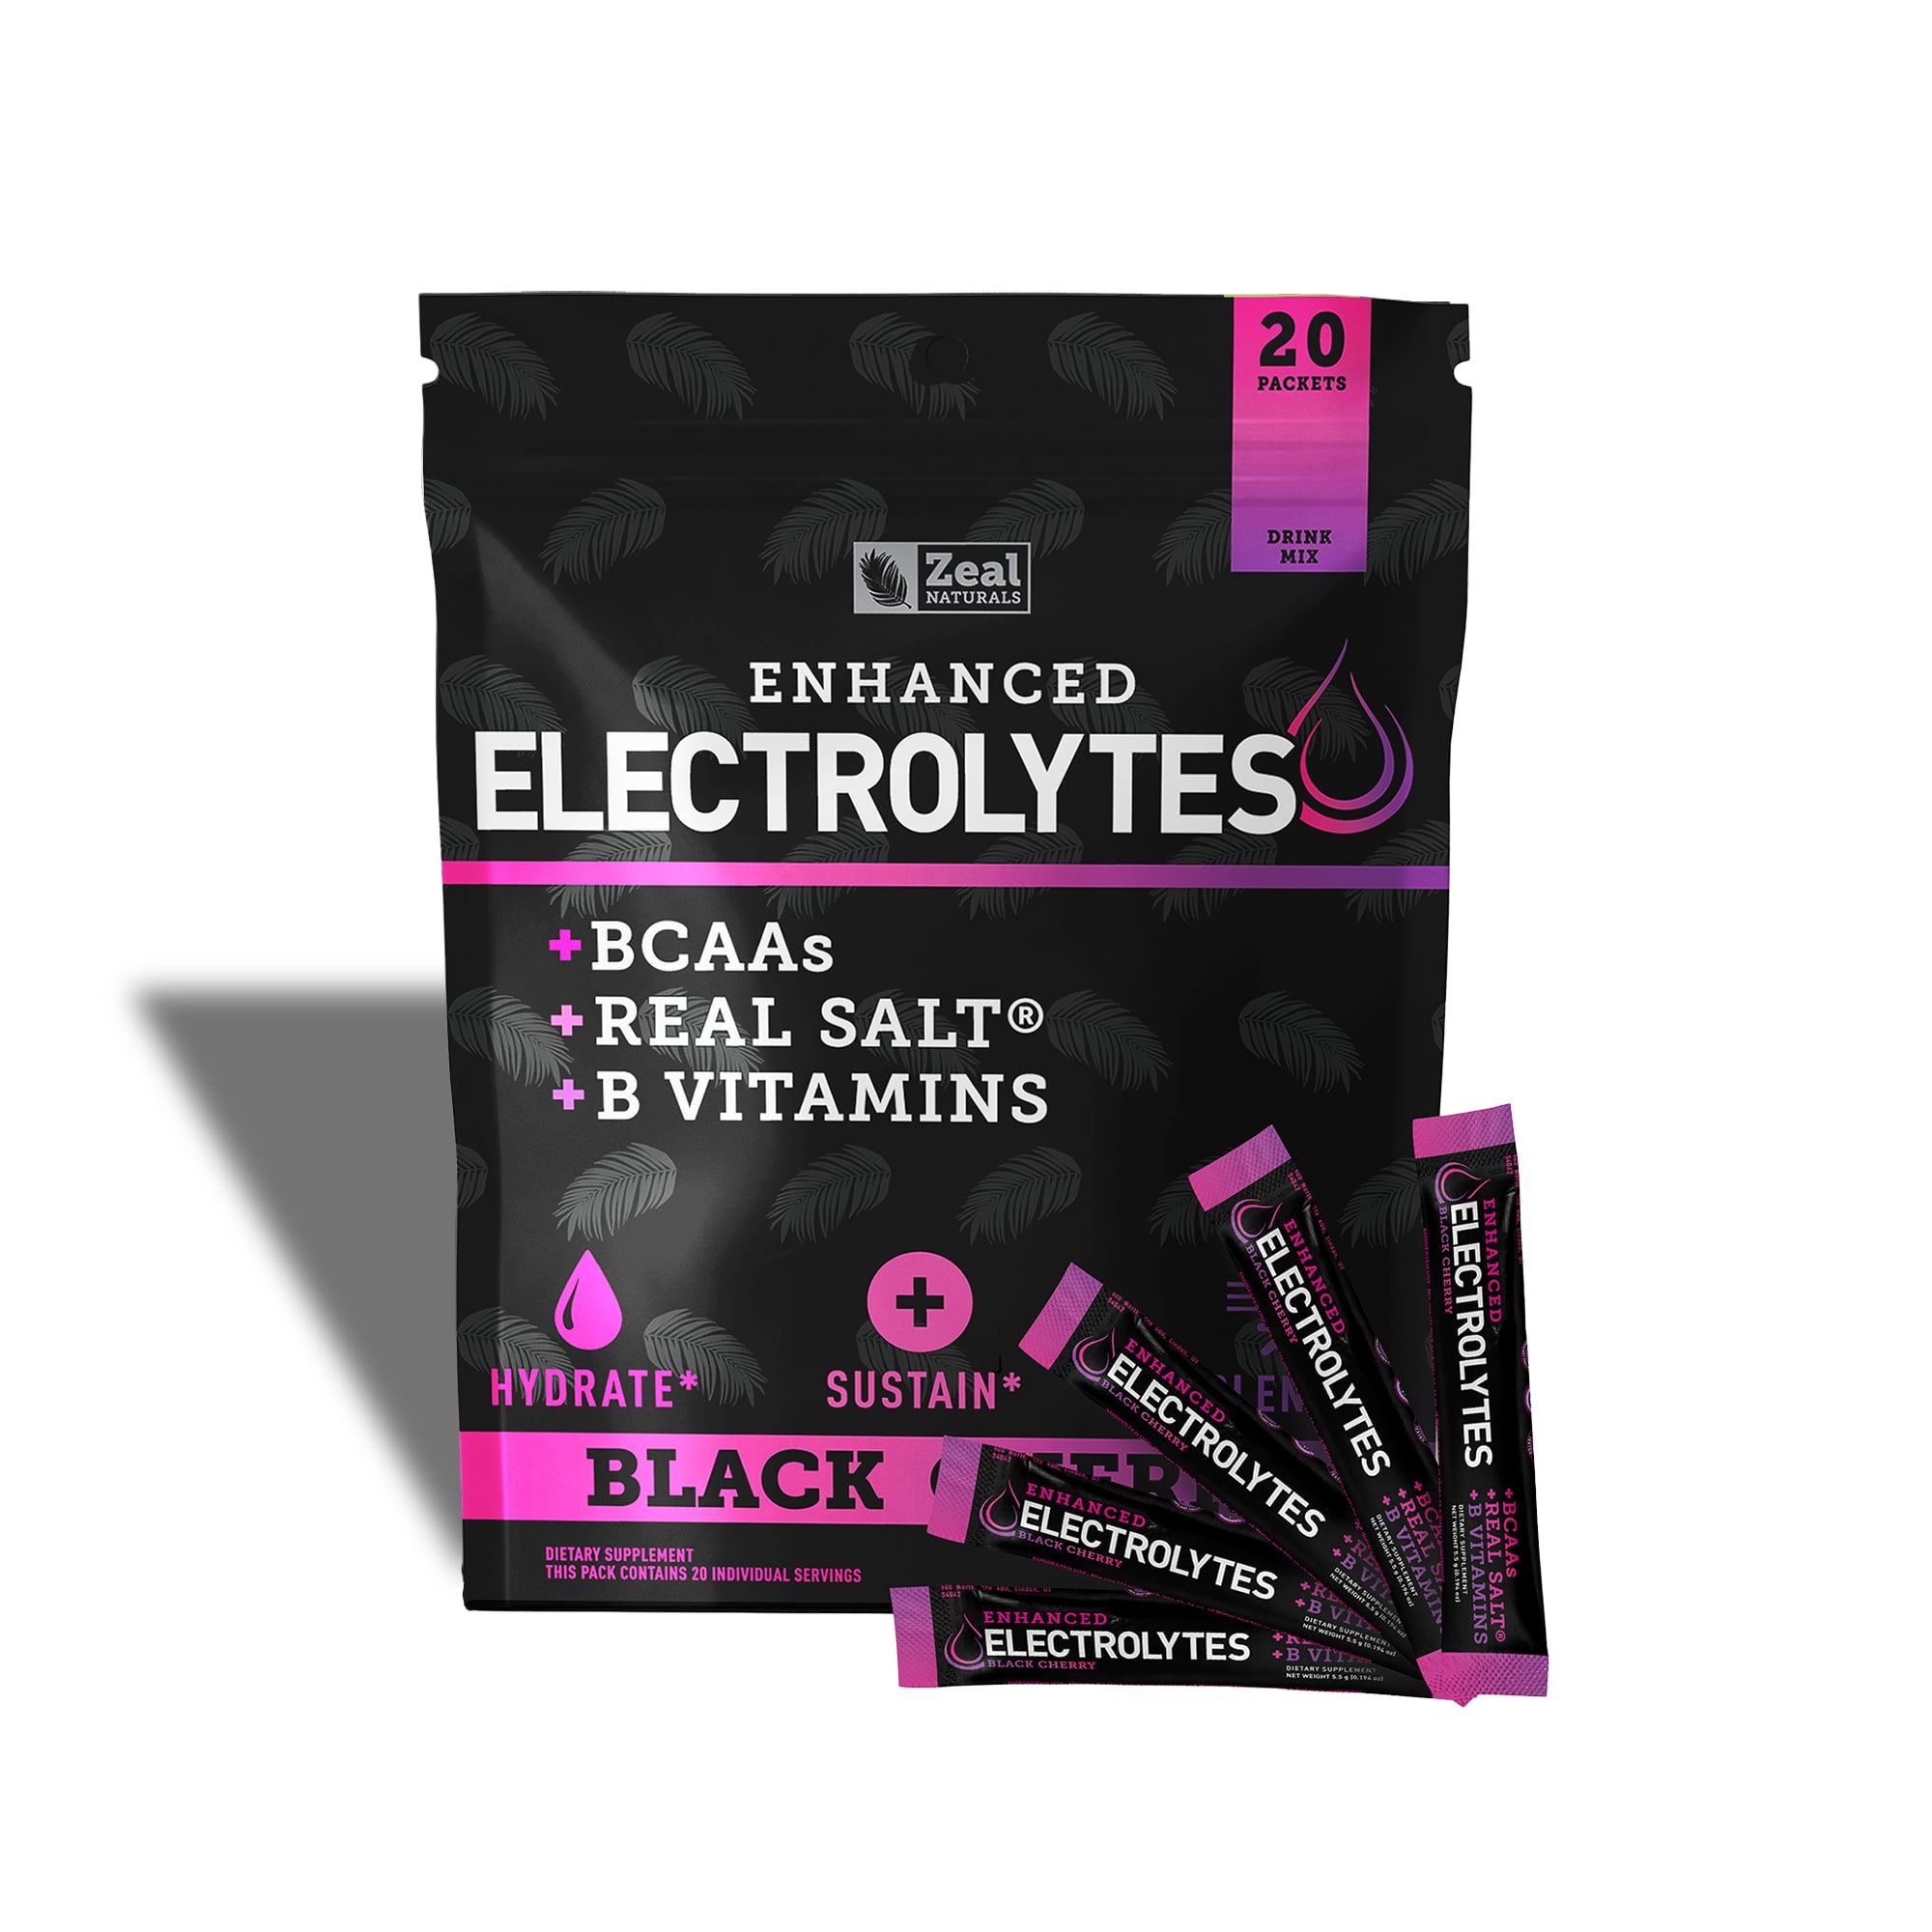 Black Cherry Flavor Zeal Enhanced Electrolytes. 20 Packets. BCAAs, Real Salt, B Vitamins.